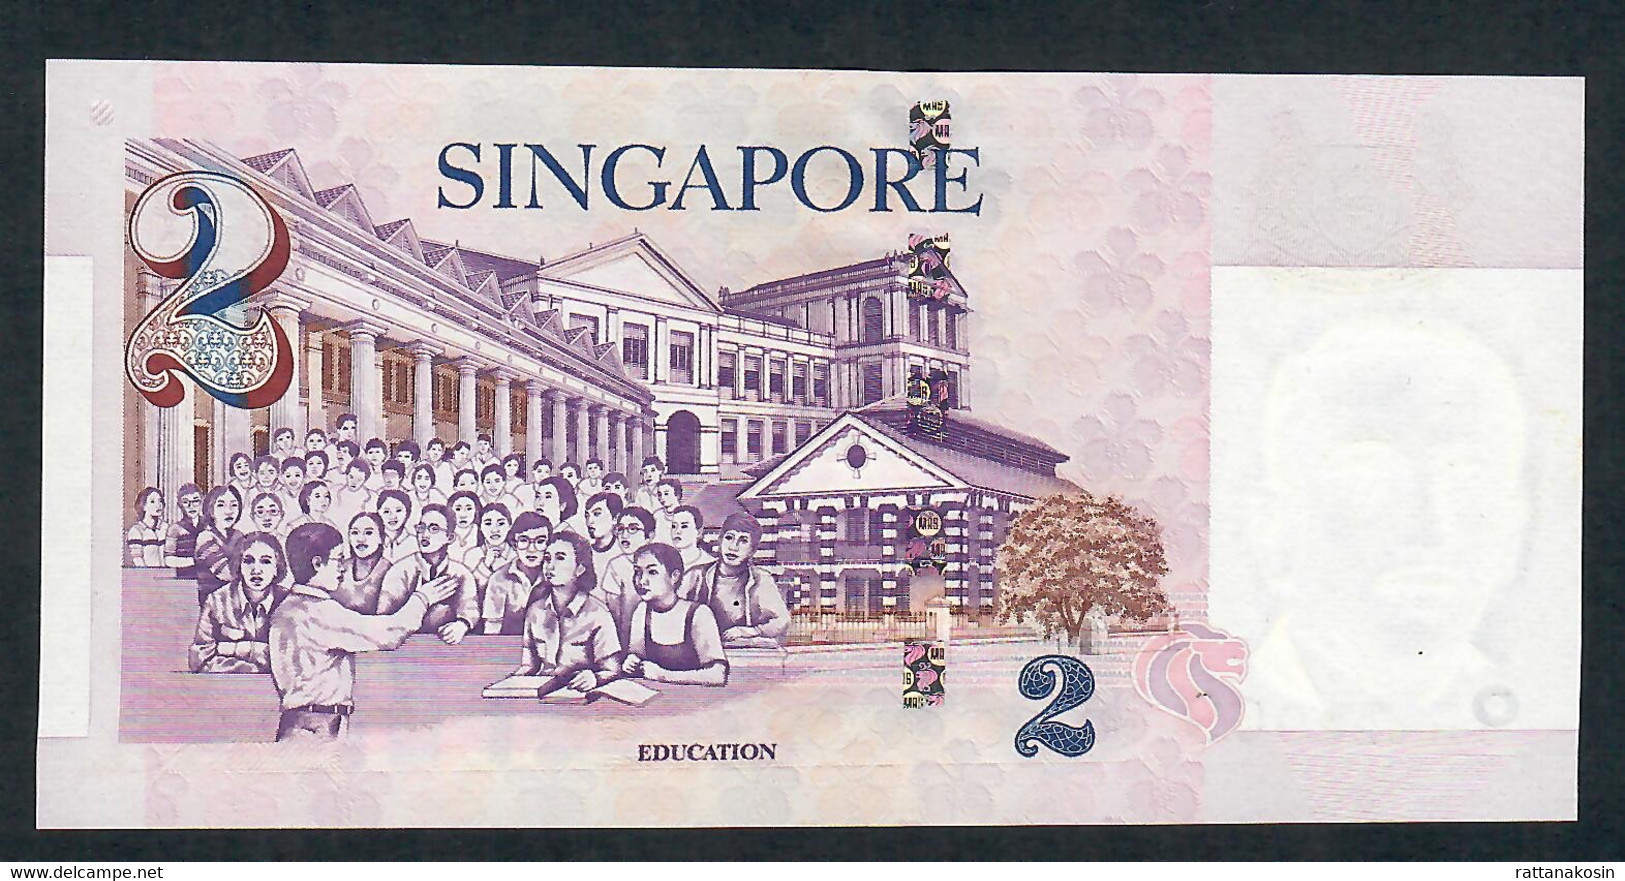 SINGAPORE P38 2 DOLLARS 1999 #OCL  UNC. - Singapur